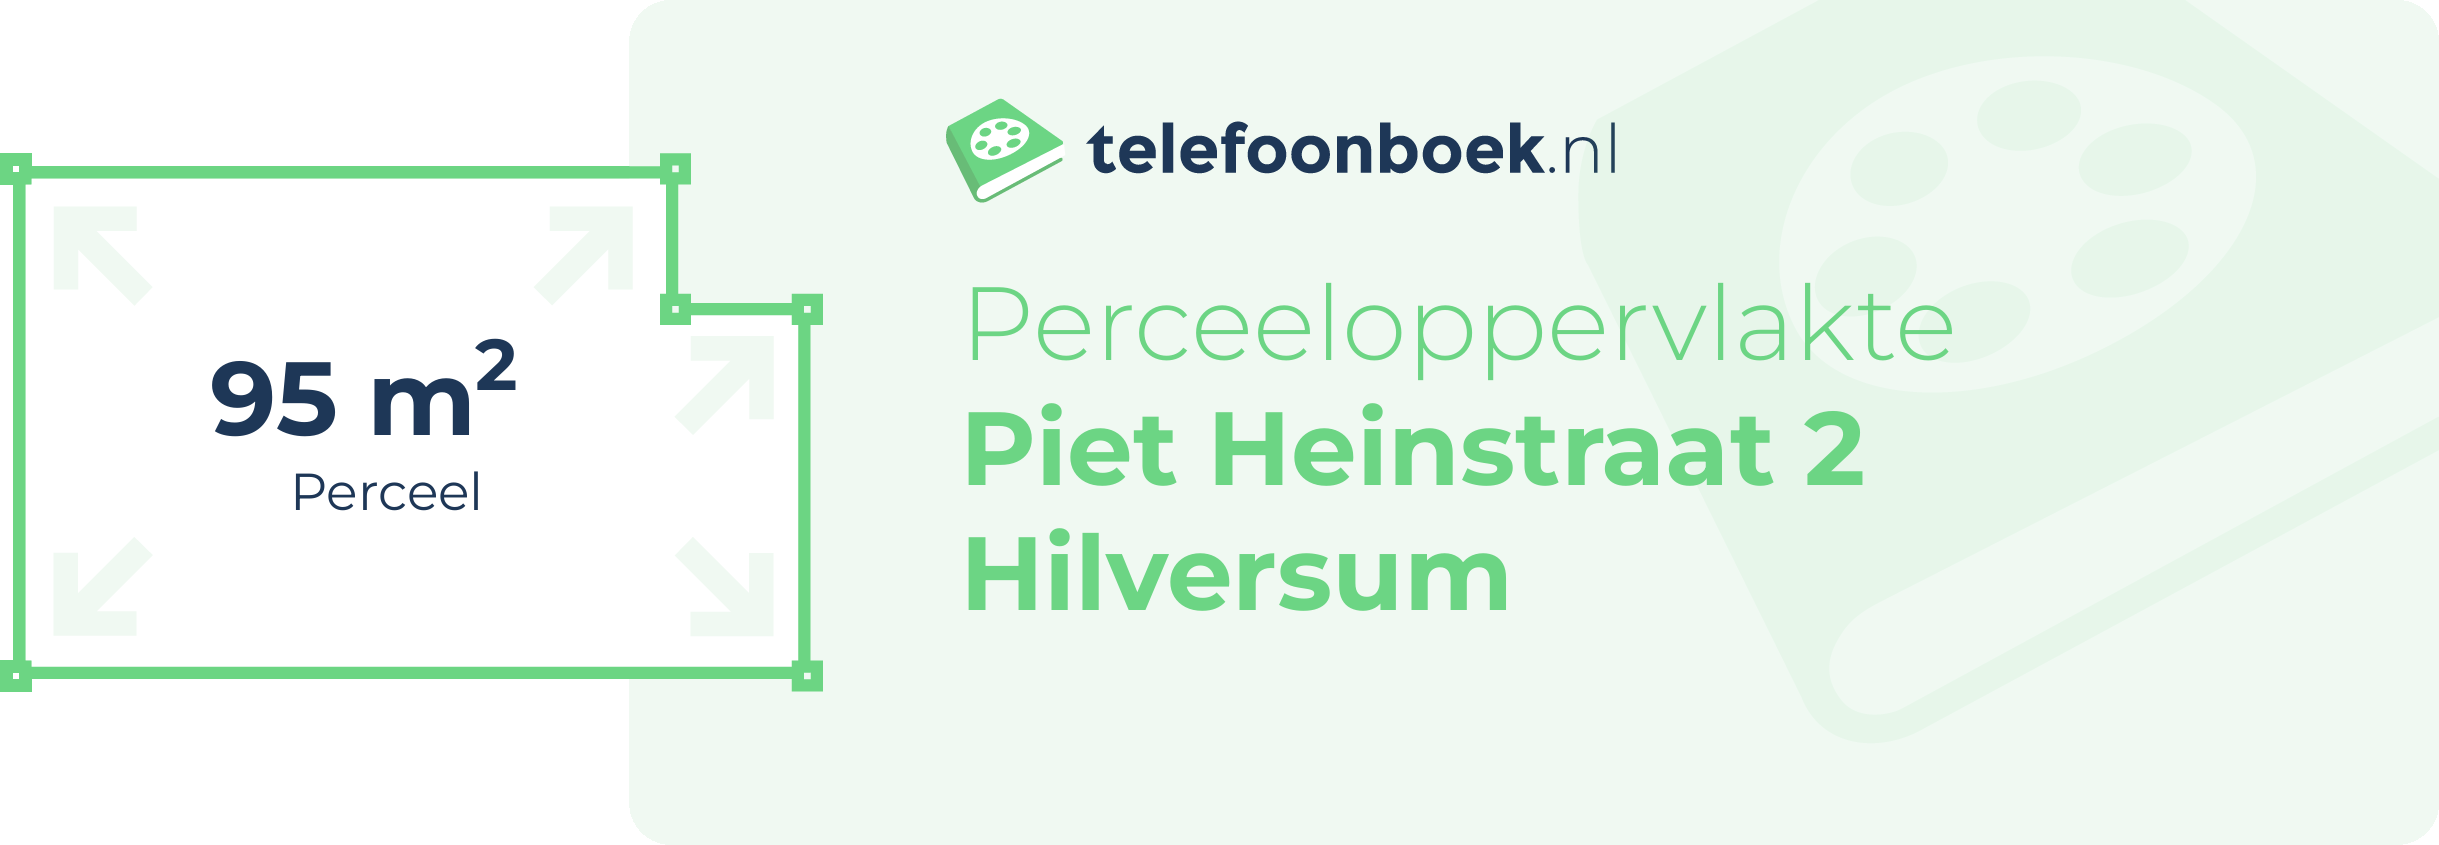 Perceeloppervlakte Piet Heinstraat 2 Hilversum